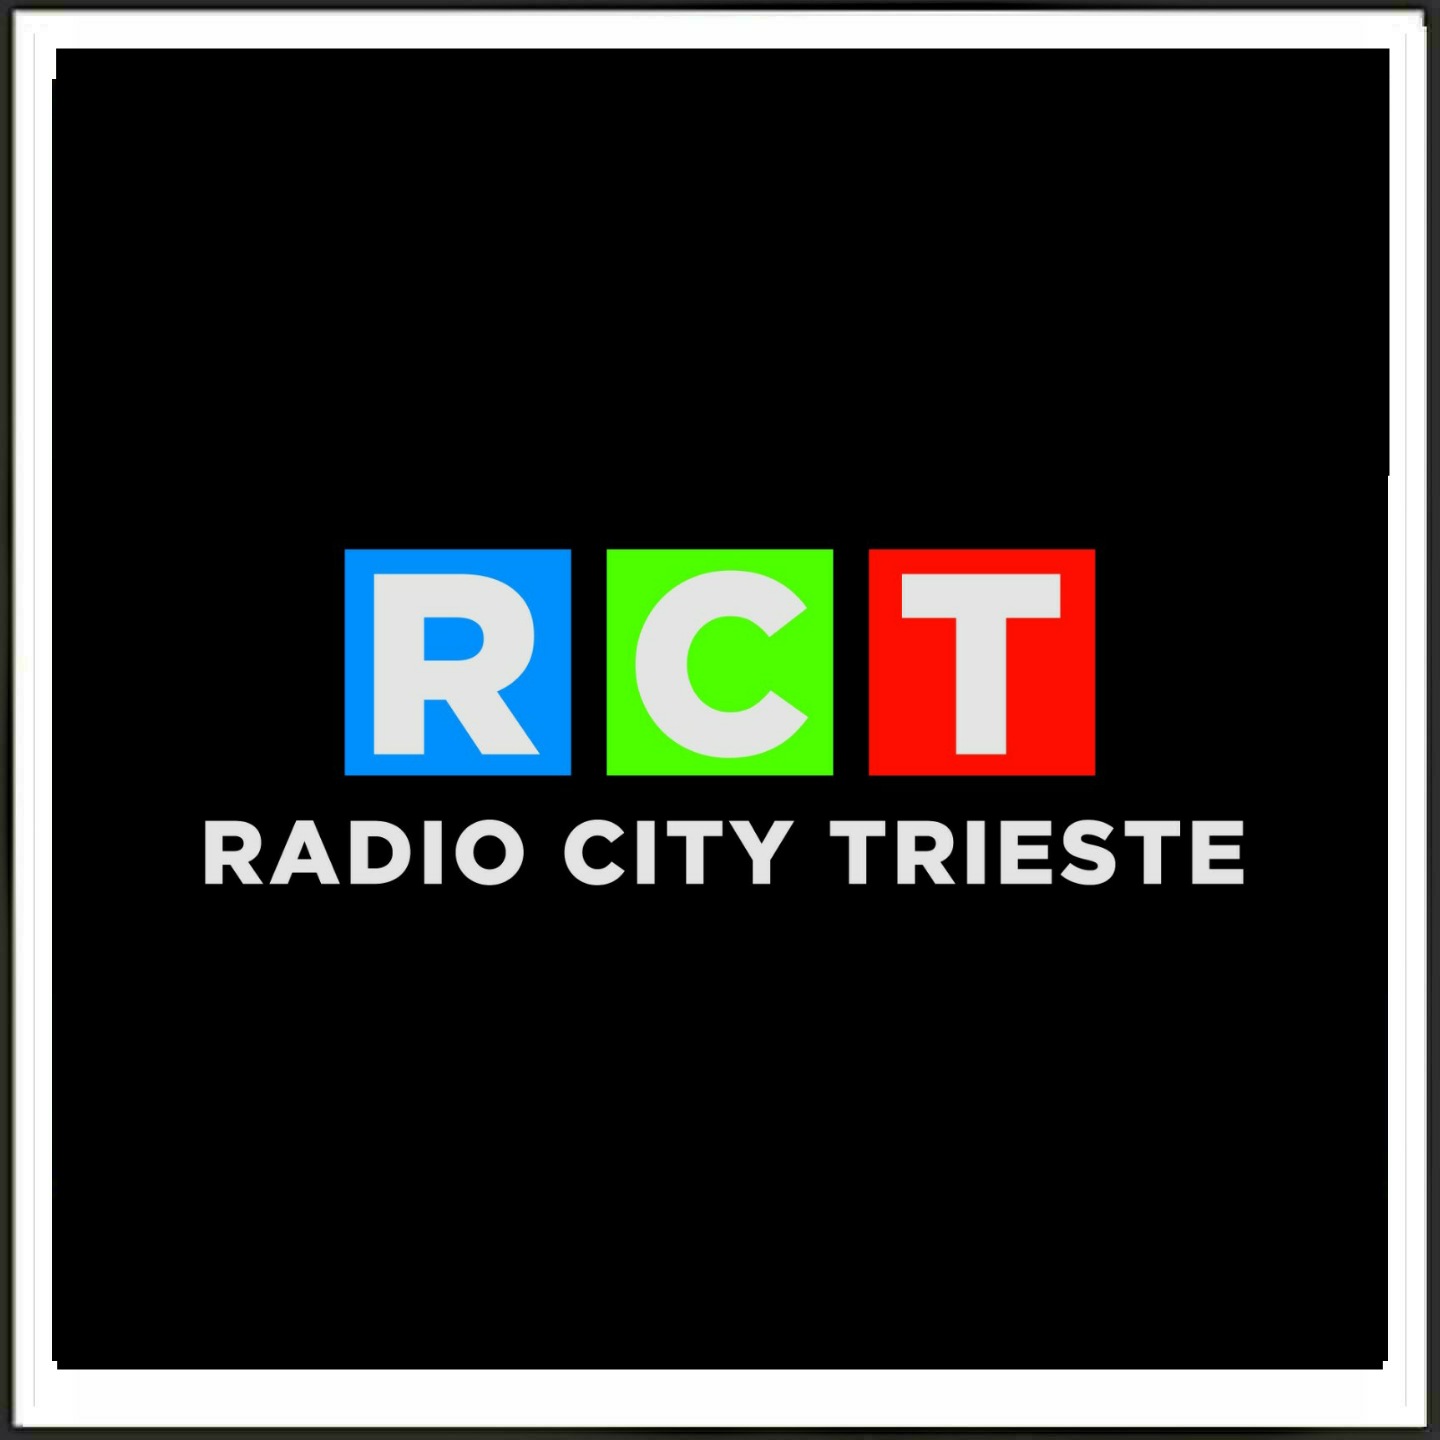 RADIO CITY TRIESTE